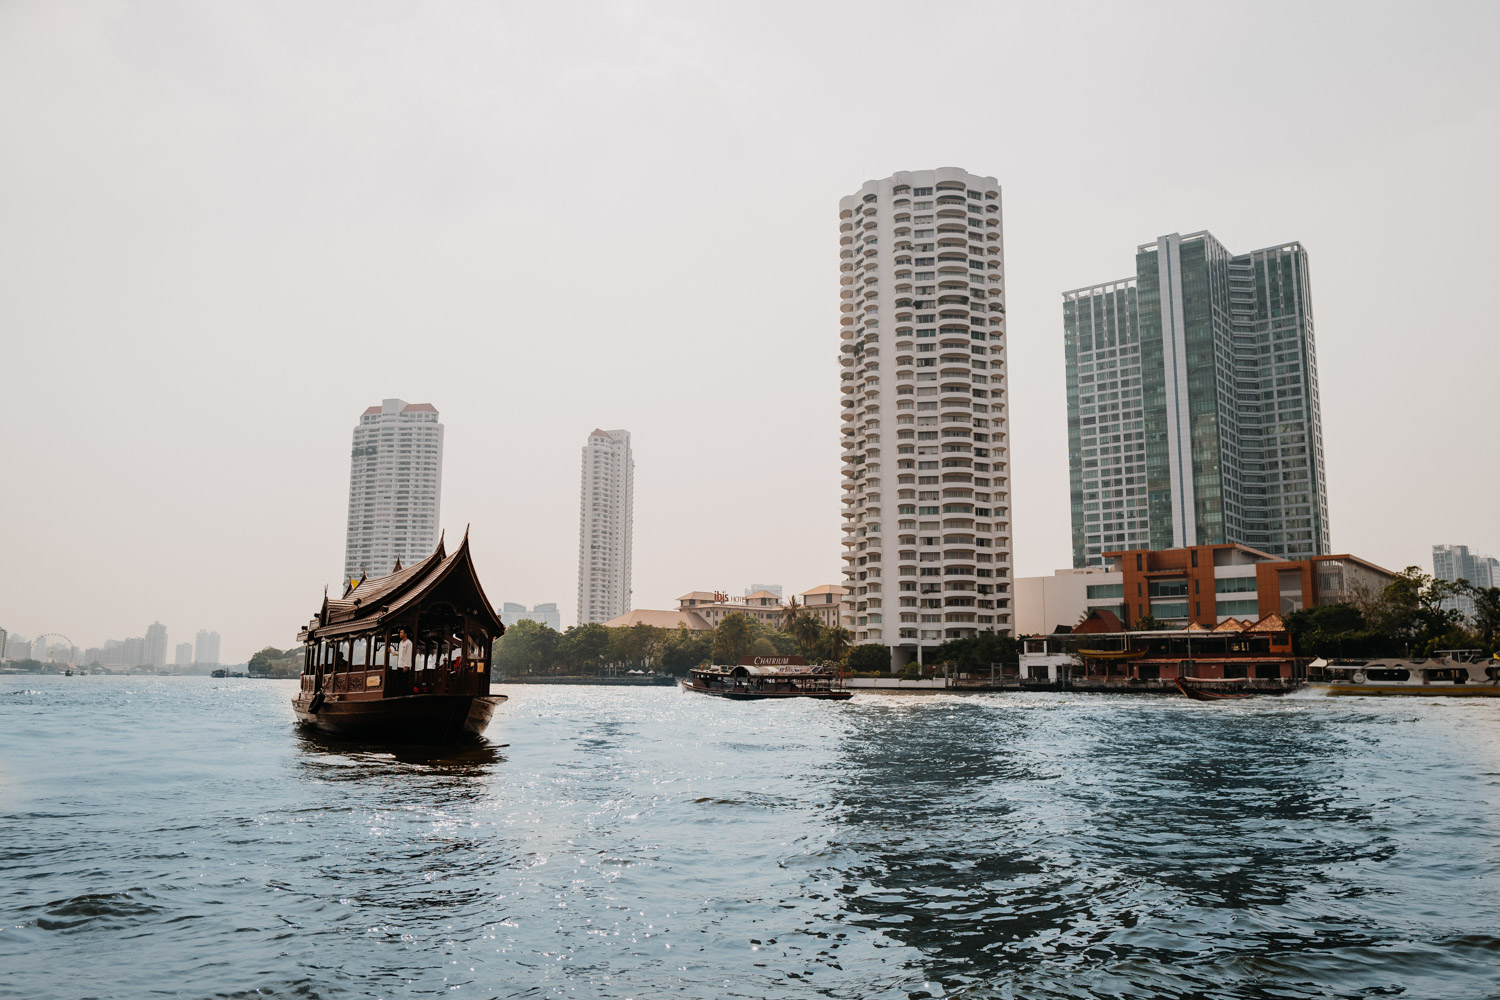 Bootstour auf dem Chao Phraya in Bangkok Thailand / Nina Danninger Photography